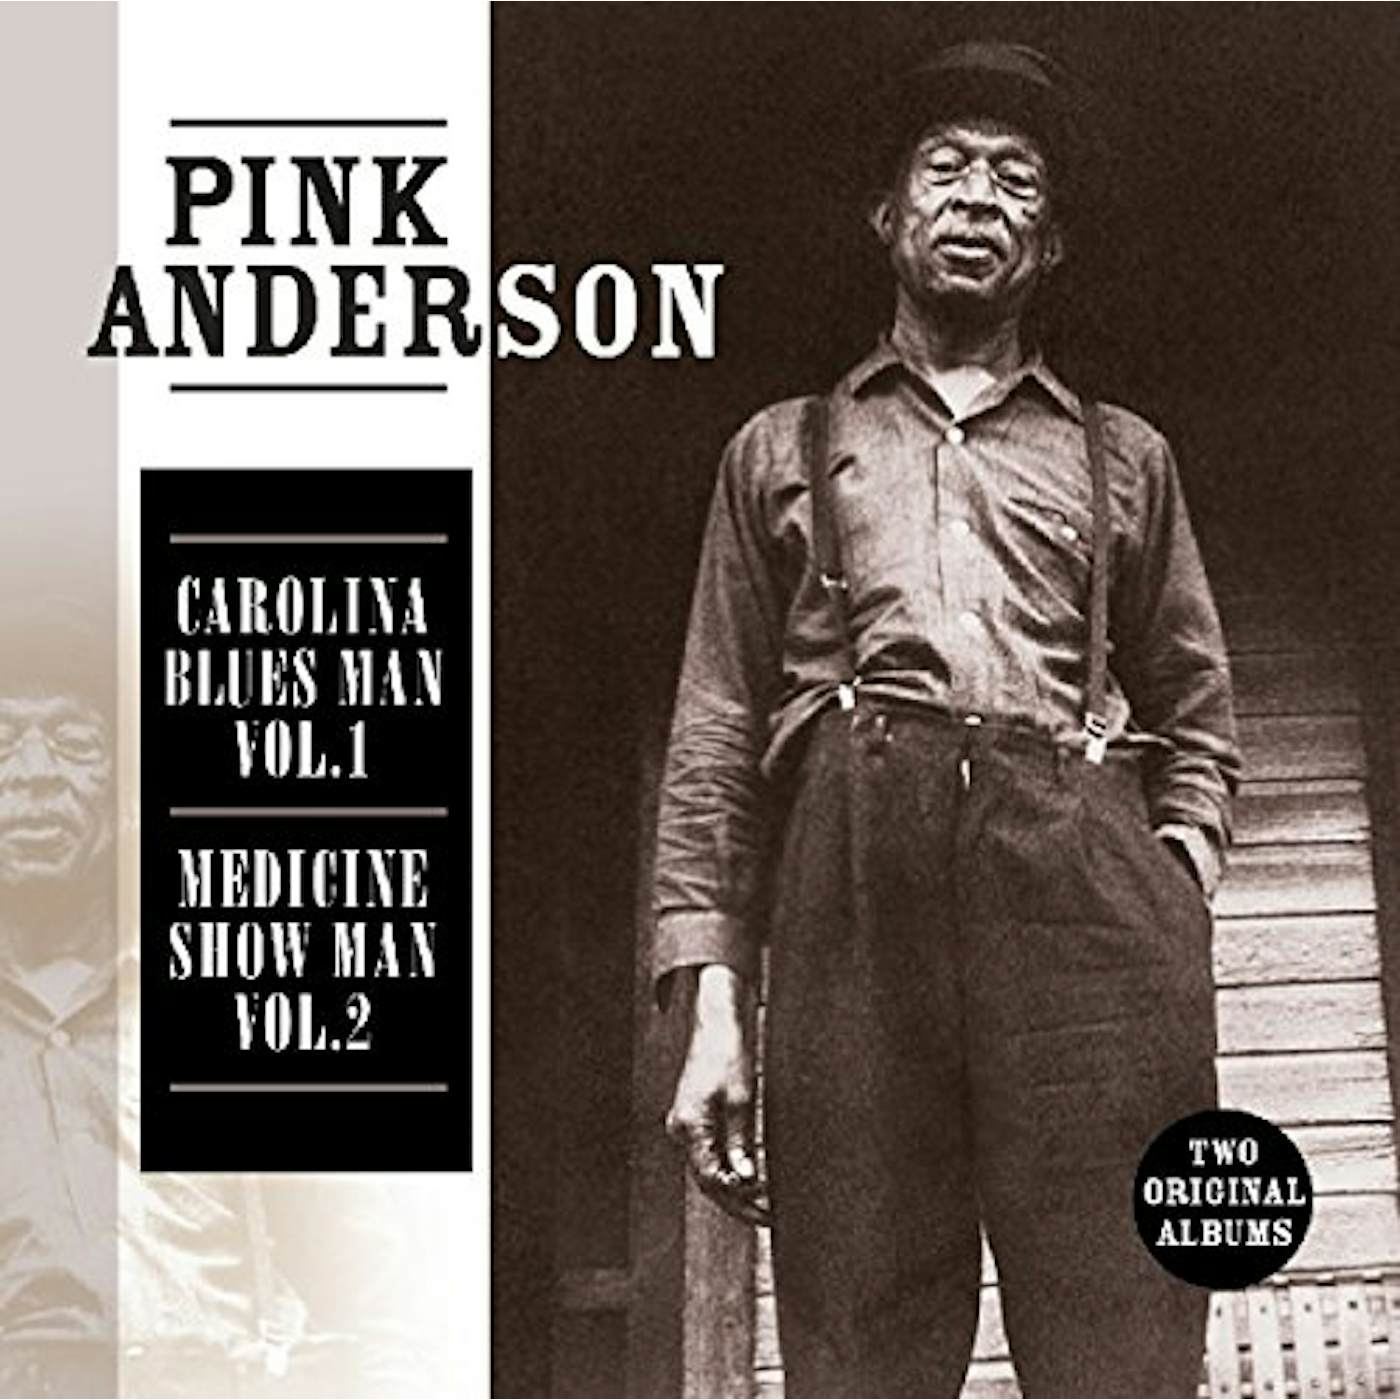 Pink Anderson CAROLINA BLUES MAN & MEDICINE SHOW MAN CD